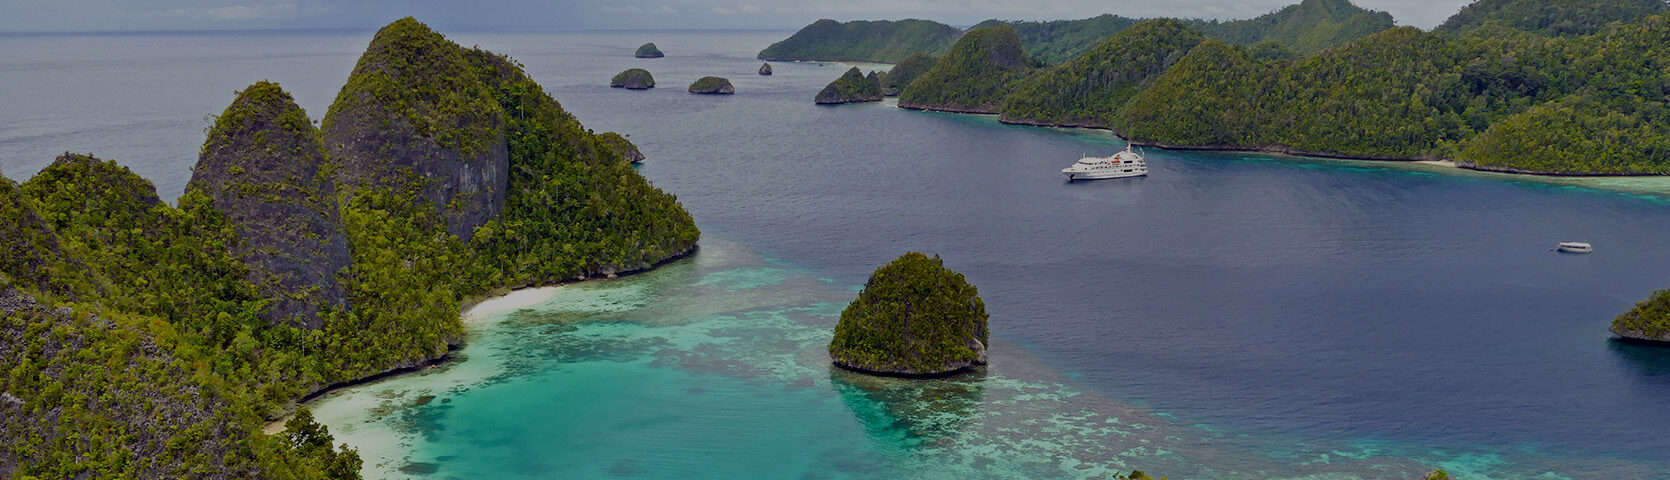 Darwin to Palau - Wayag Island and Raja Ampat